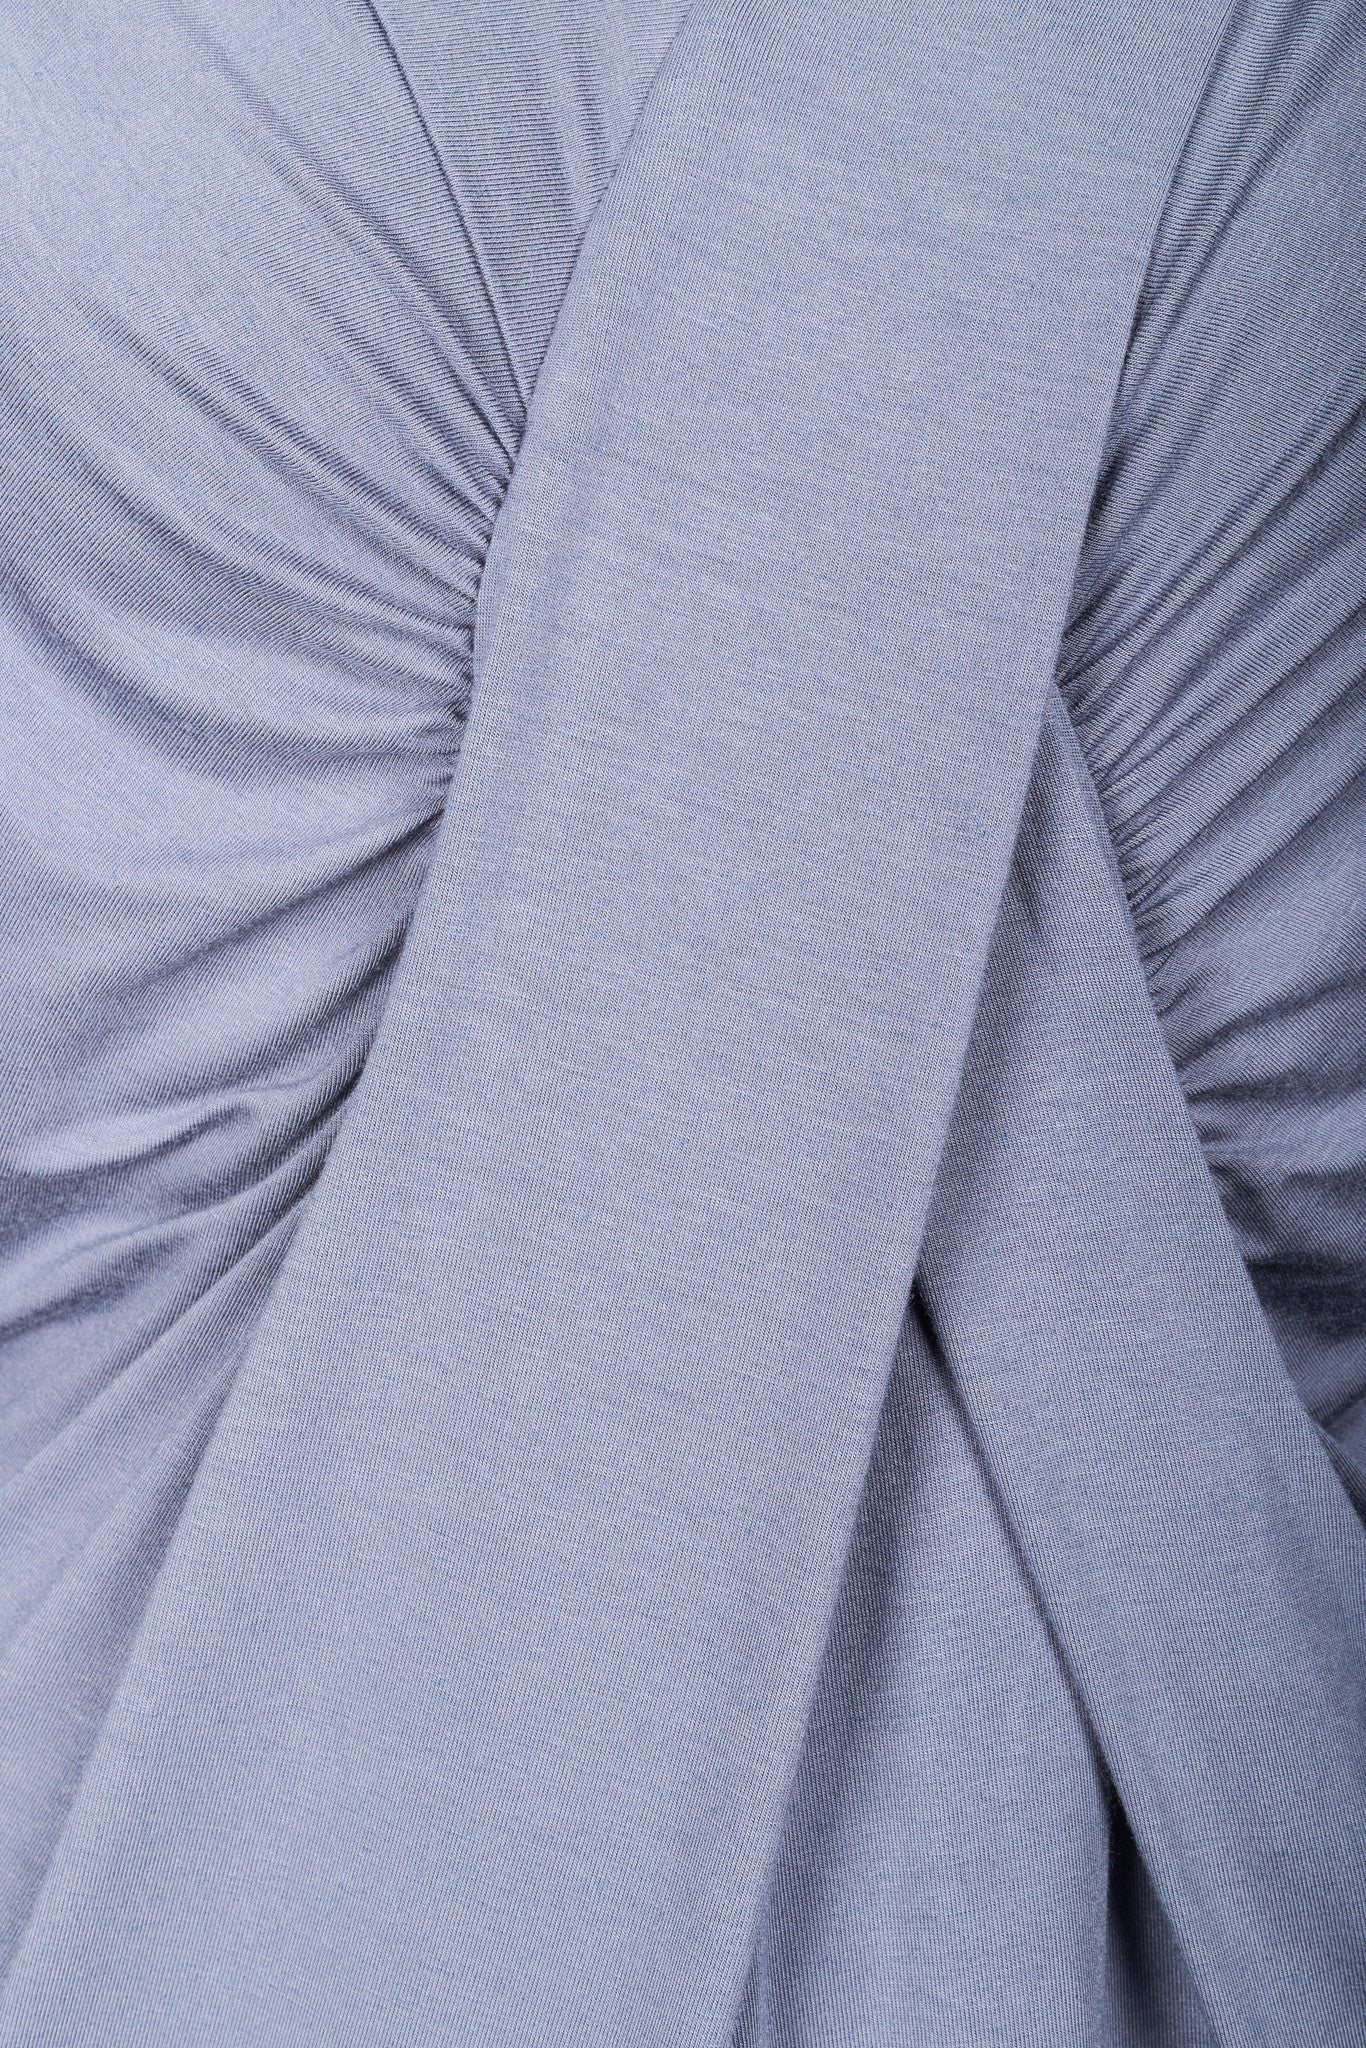 Viscose & cashmere blend dress in light blue